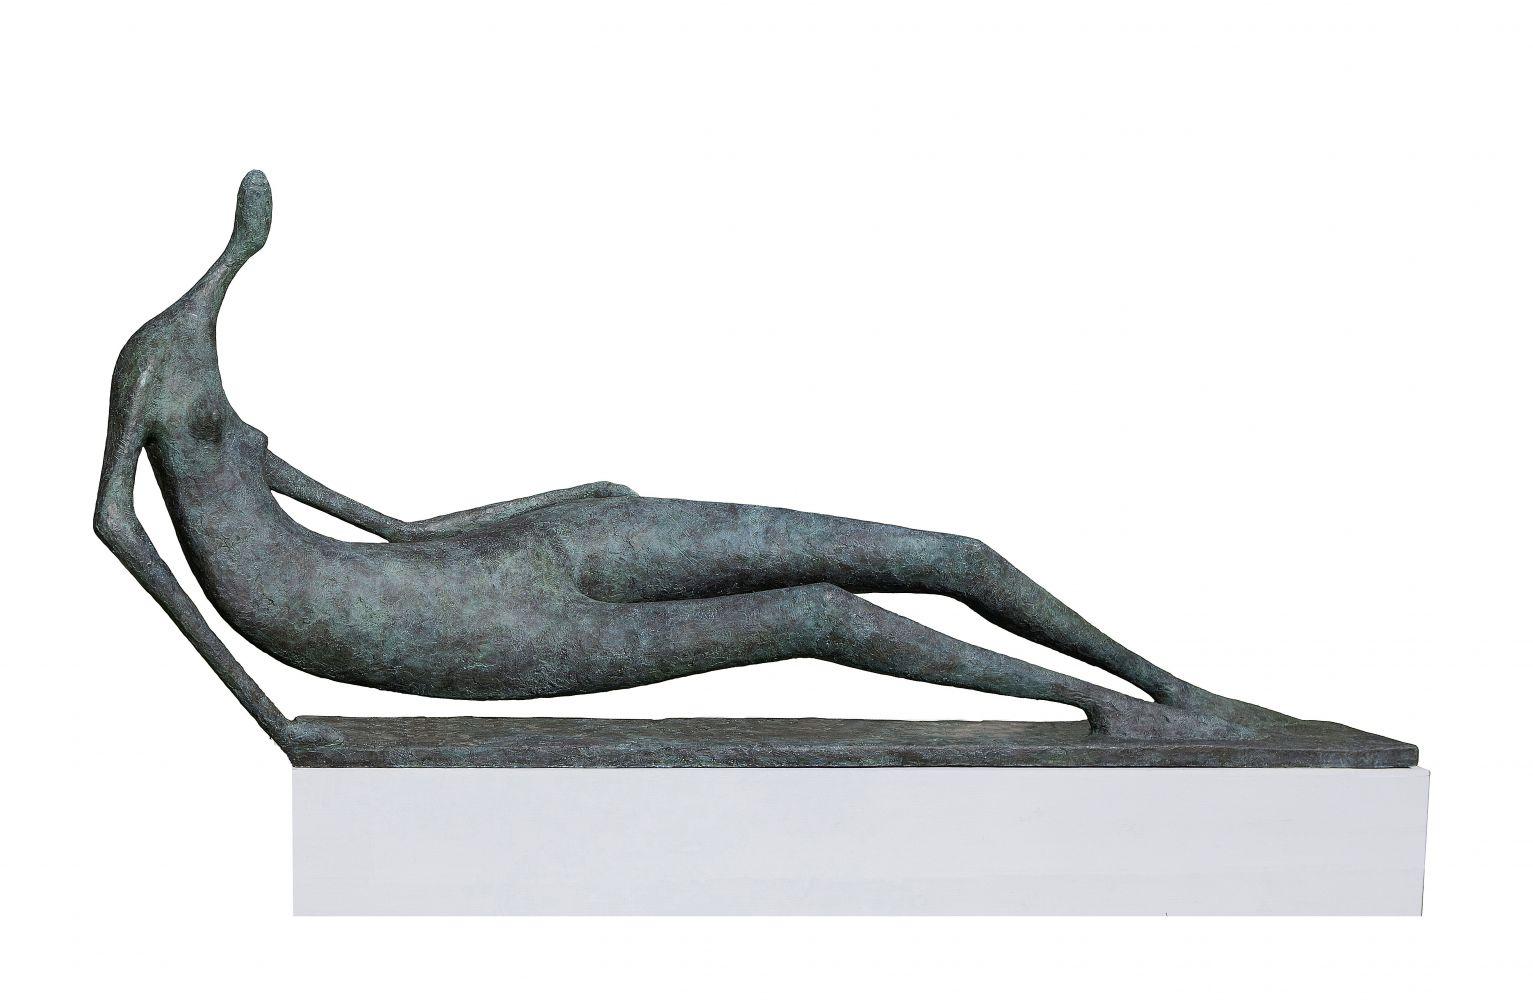 Monumental Lying Figure by Pierre Yermia - 10ft wide bronze sculpture